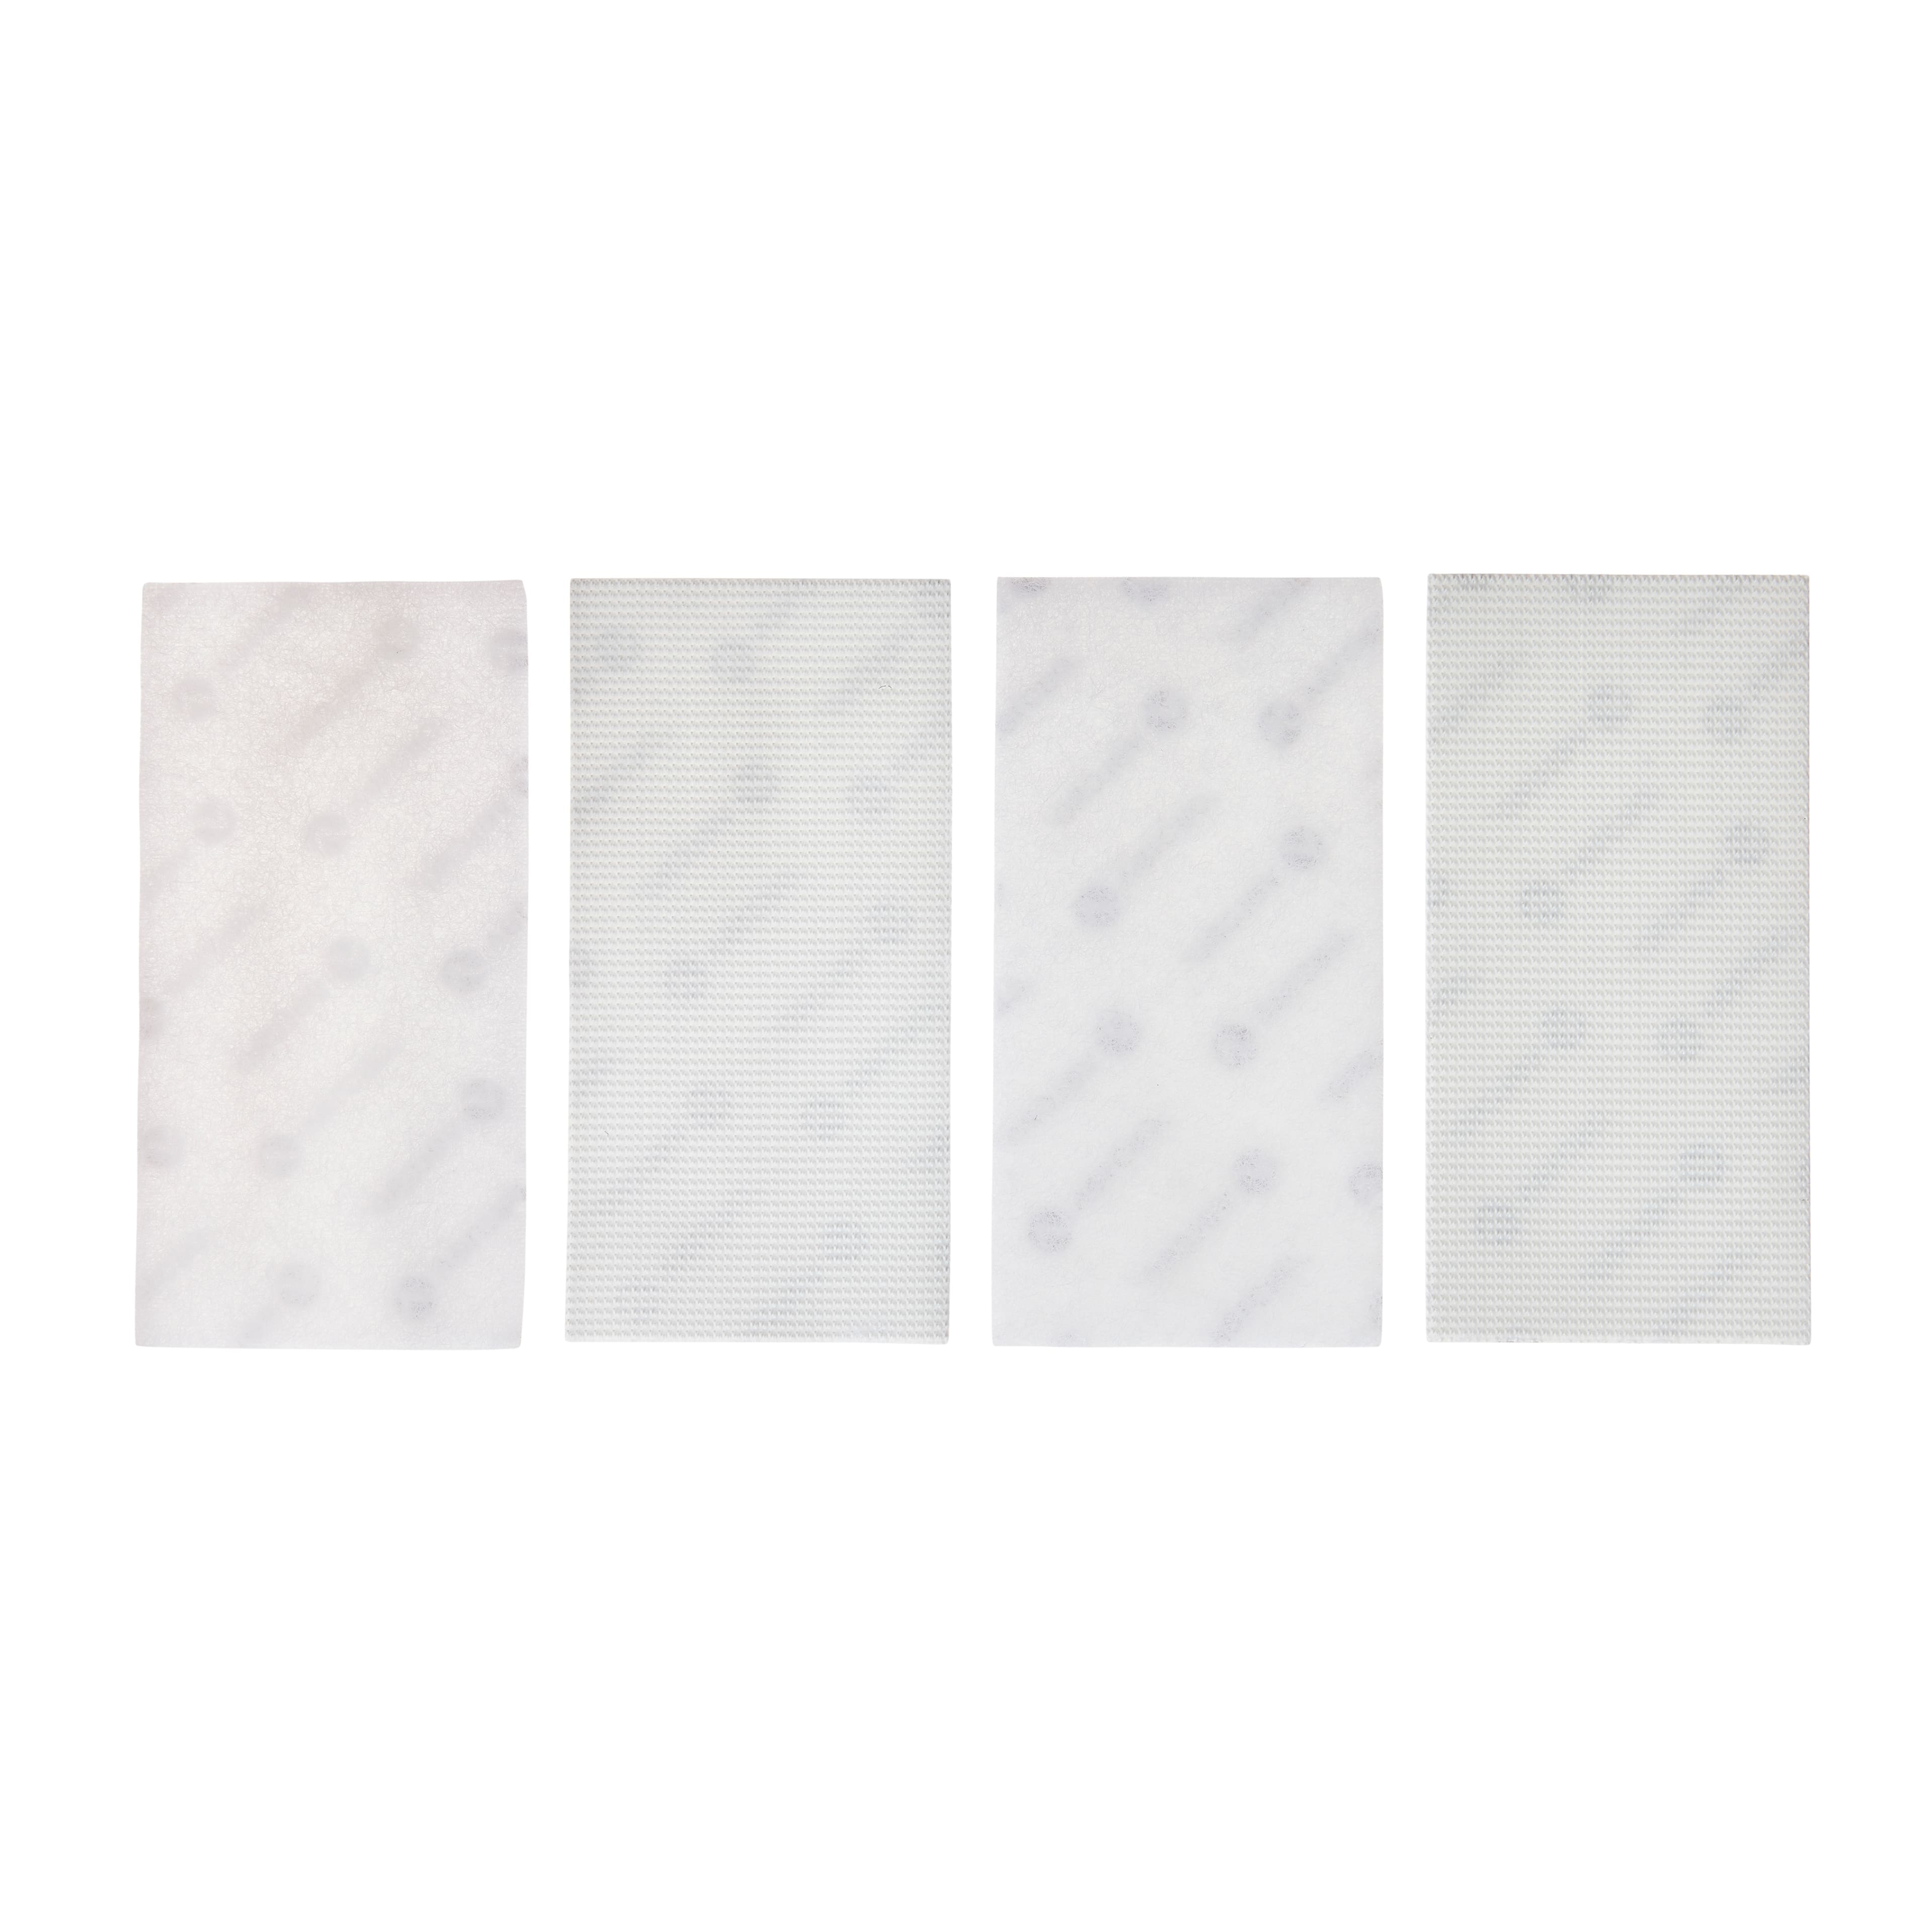 12 Packs: 2 ct. (48 total) VELCRO&#xAE; Brand White Industrial Strength Strips